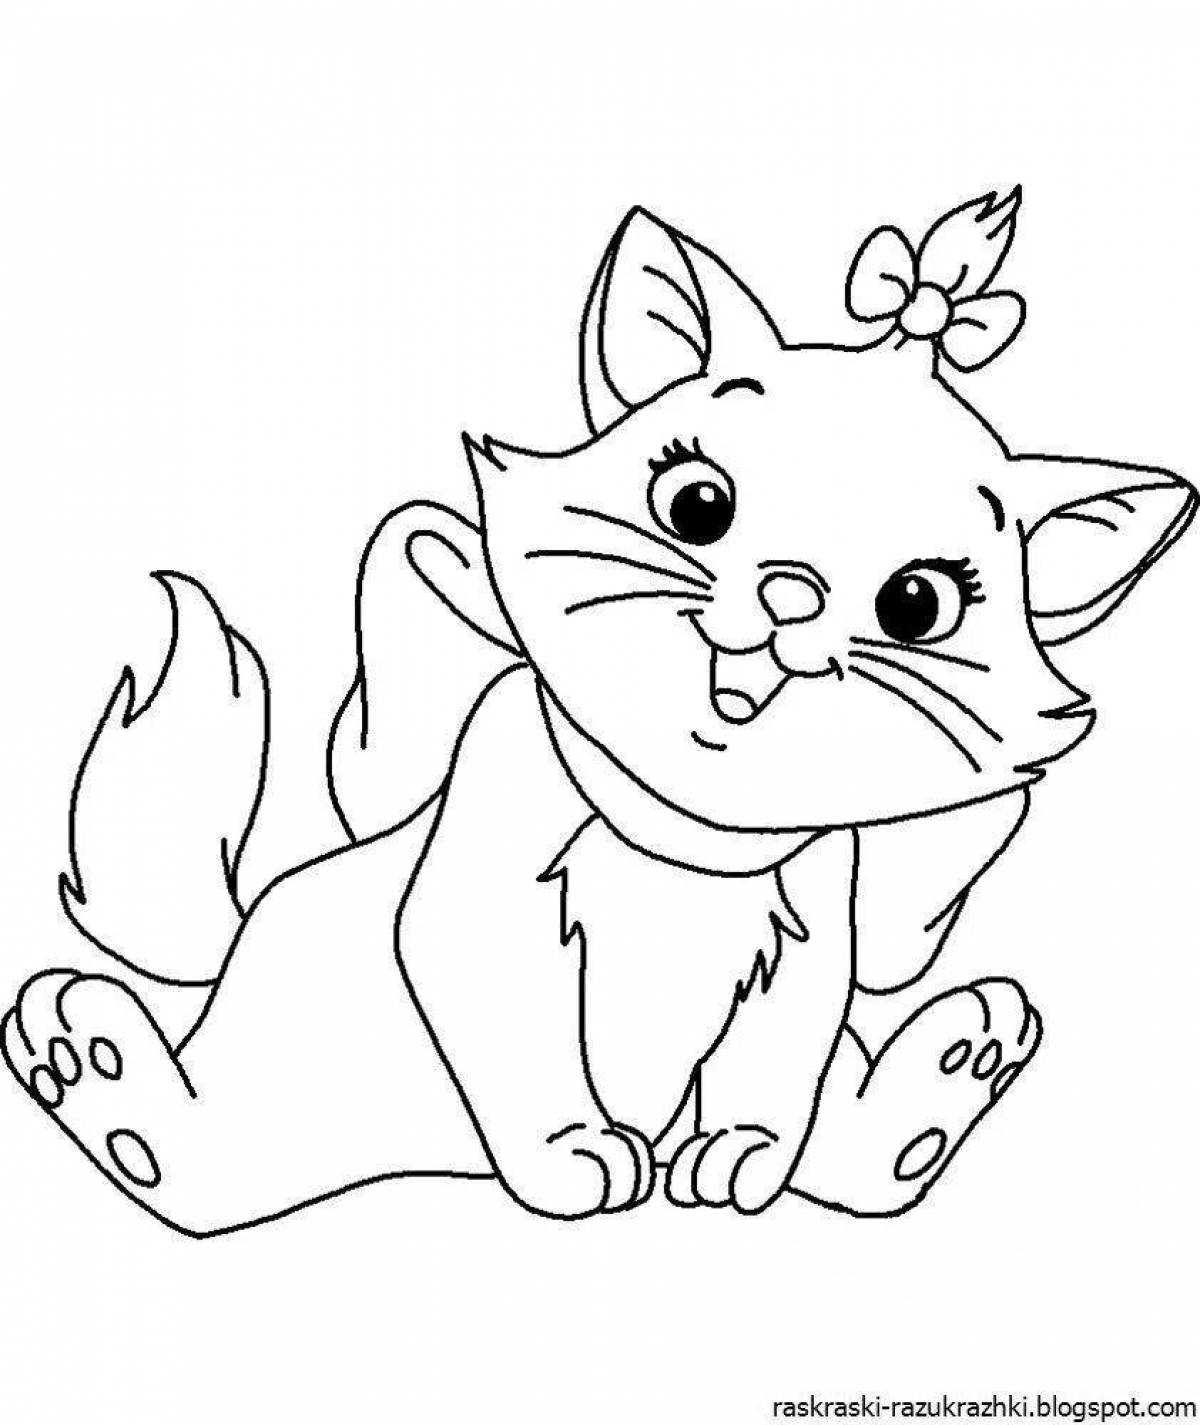 Snuggab kitten coloring page